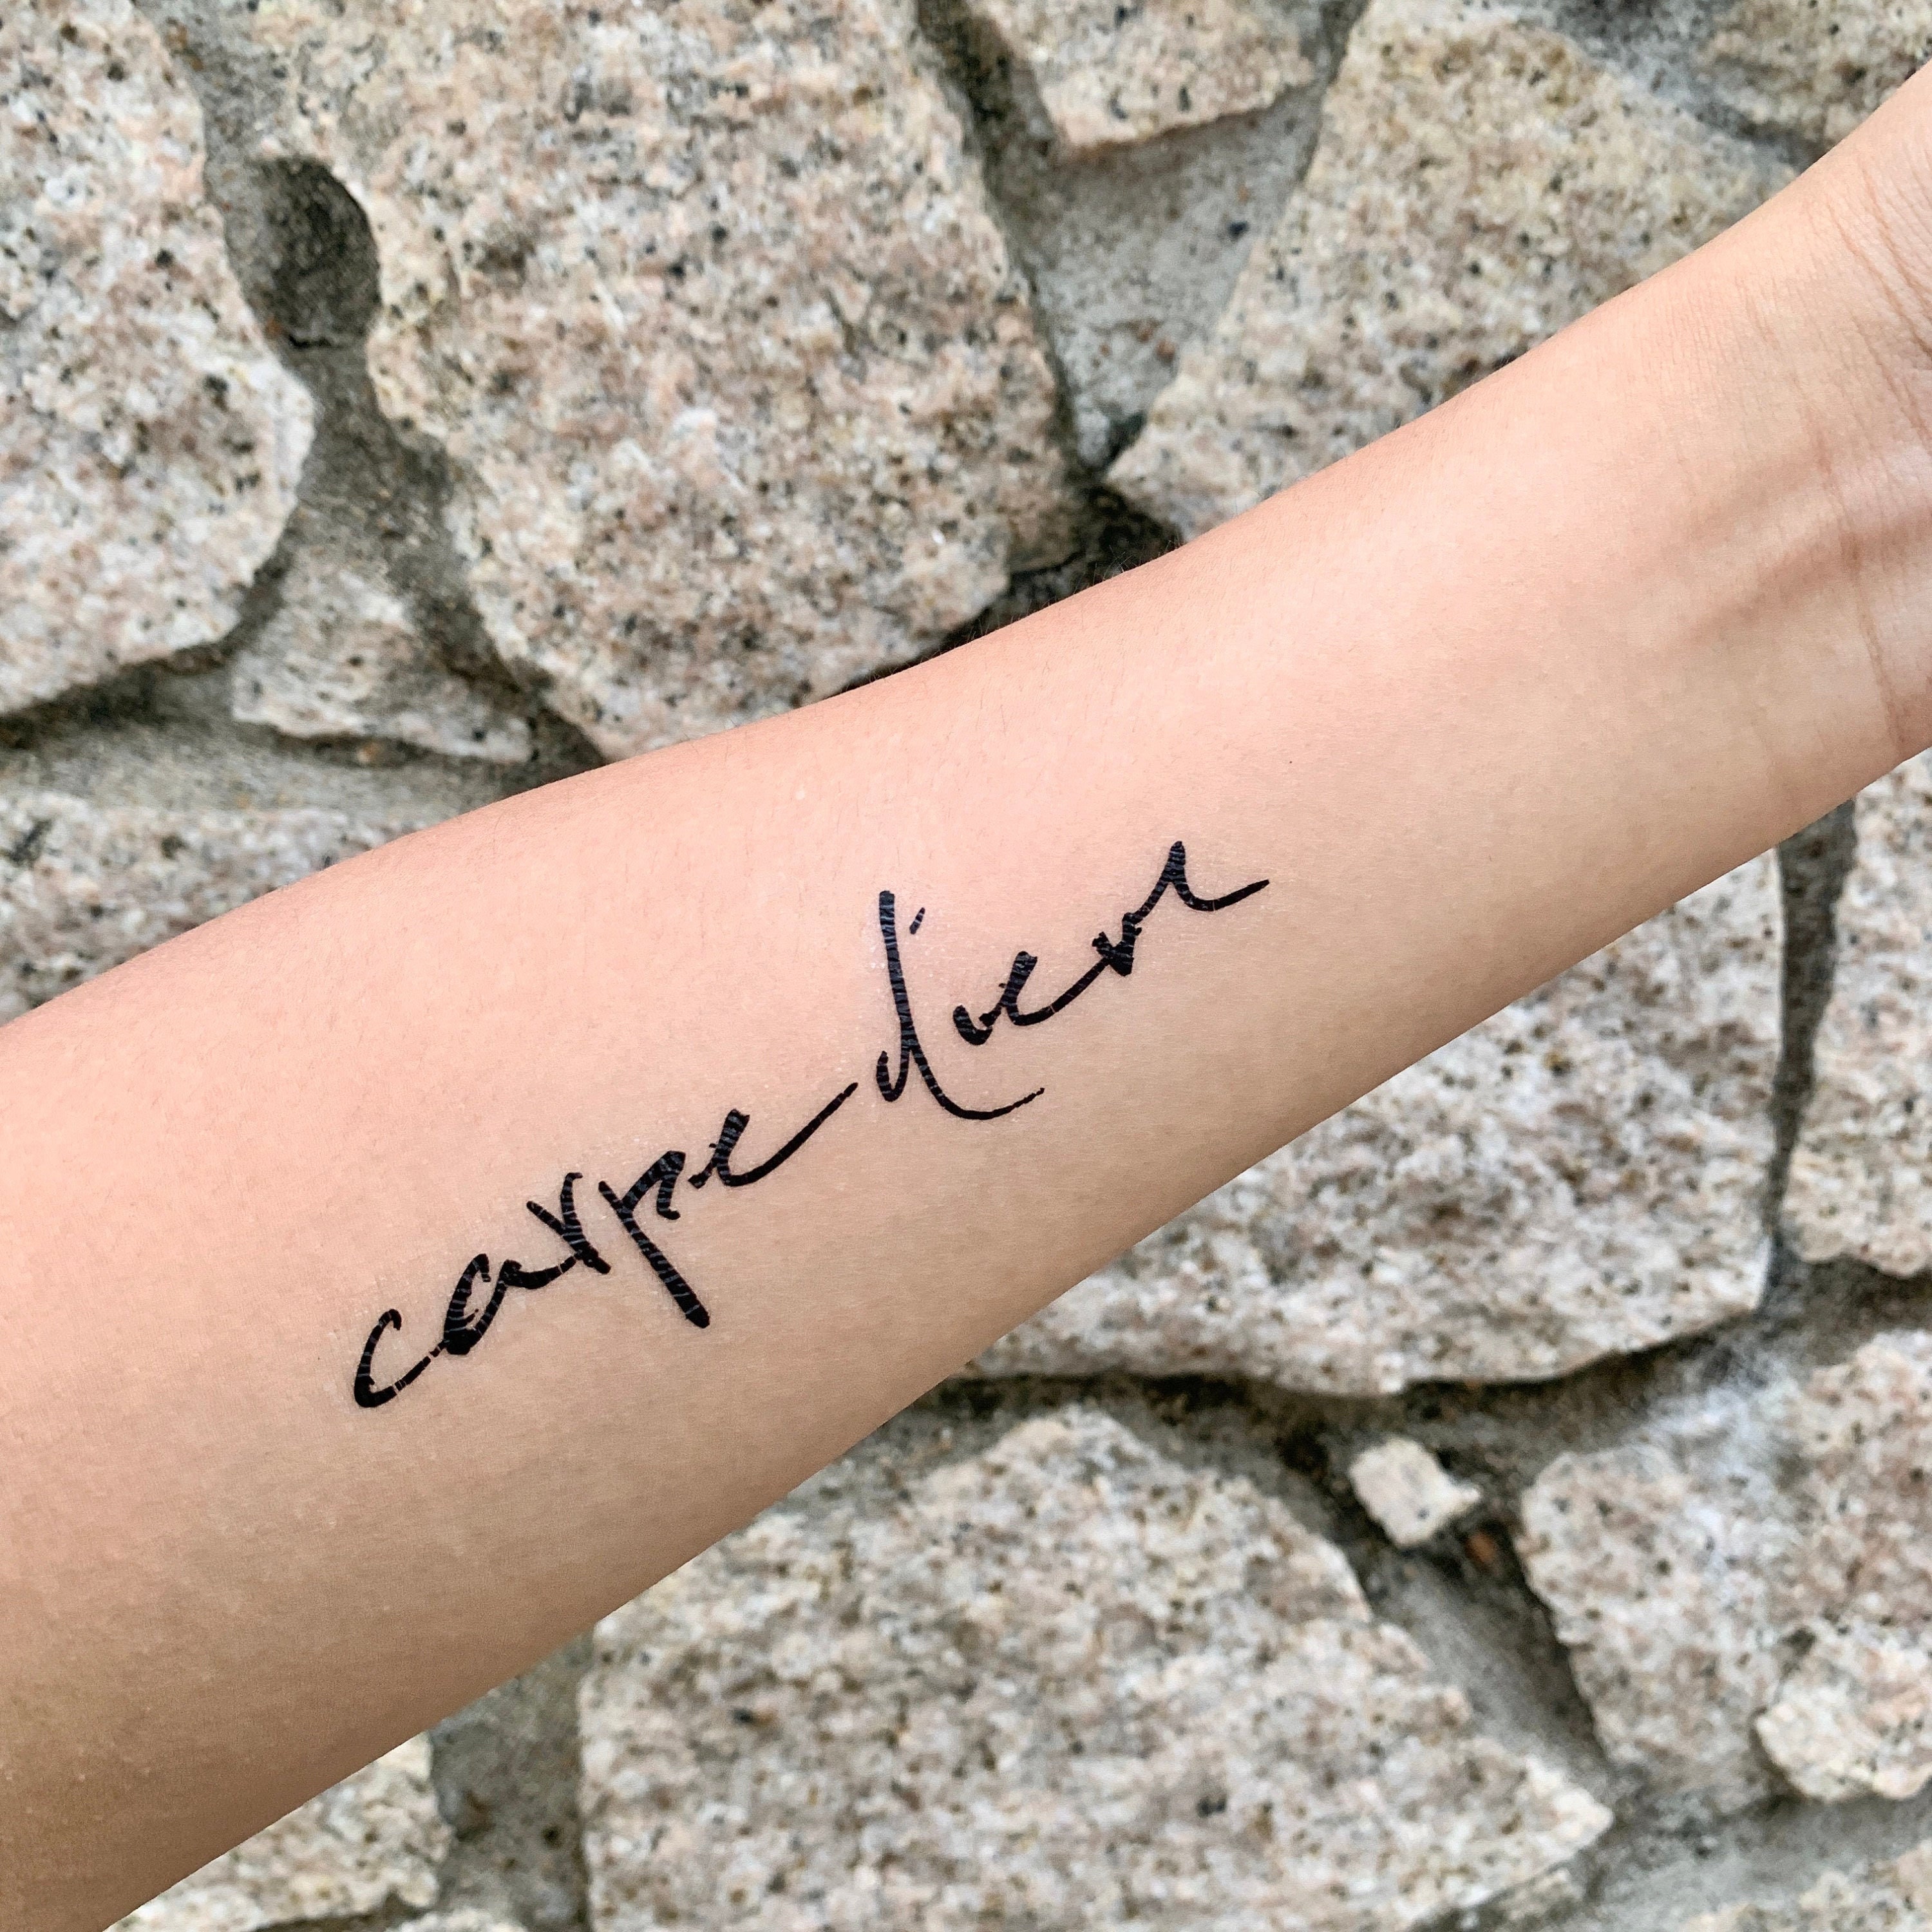 Carpe diem tattoo by Gianina Caputo  Tattoogridnet